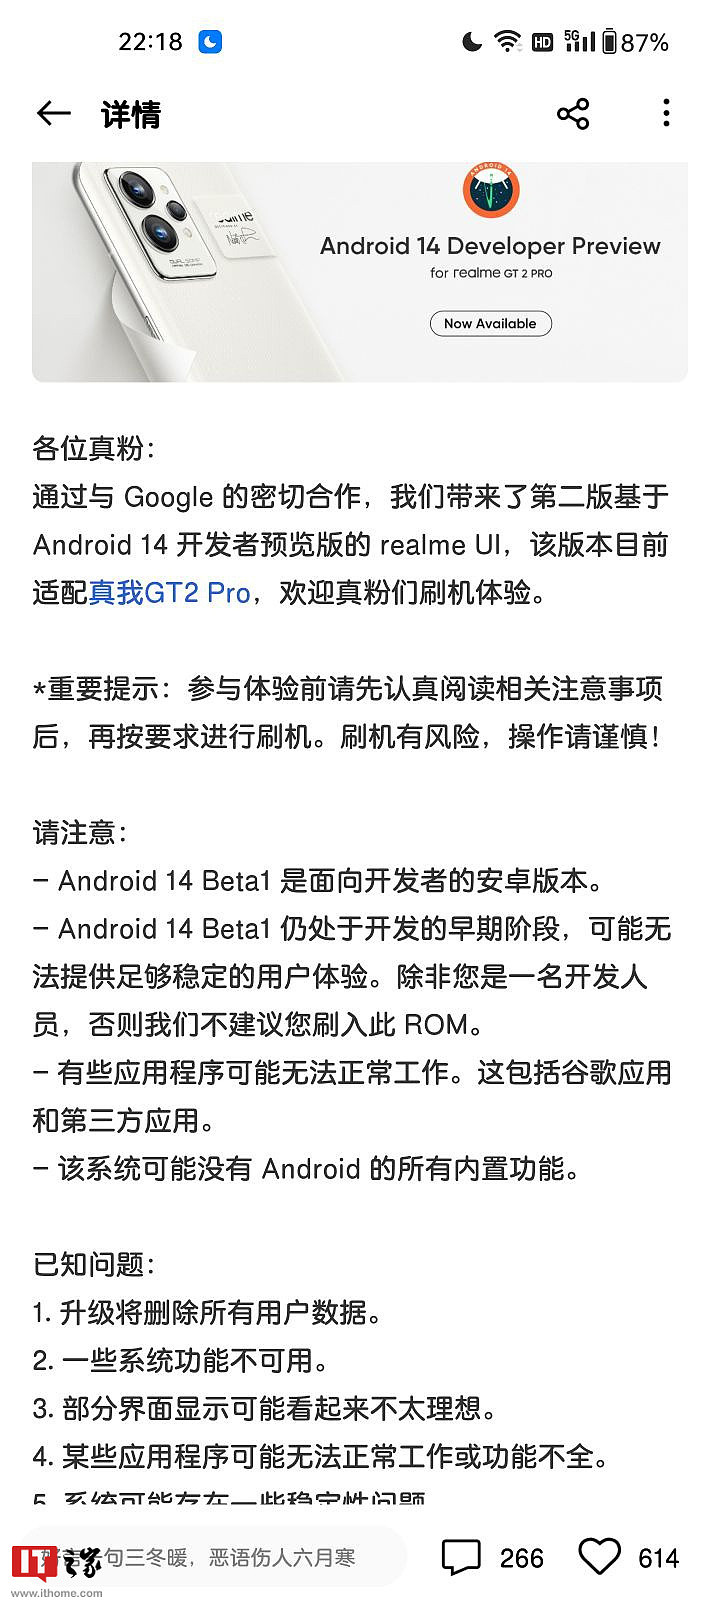 realme GT2 Pro 手机官宣支持升级安卓 14 Beta 1 - 1